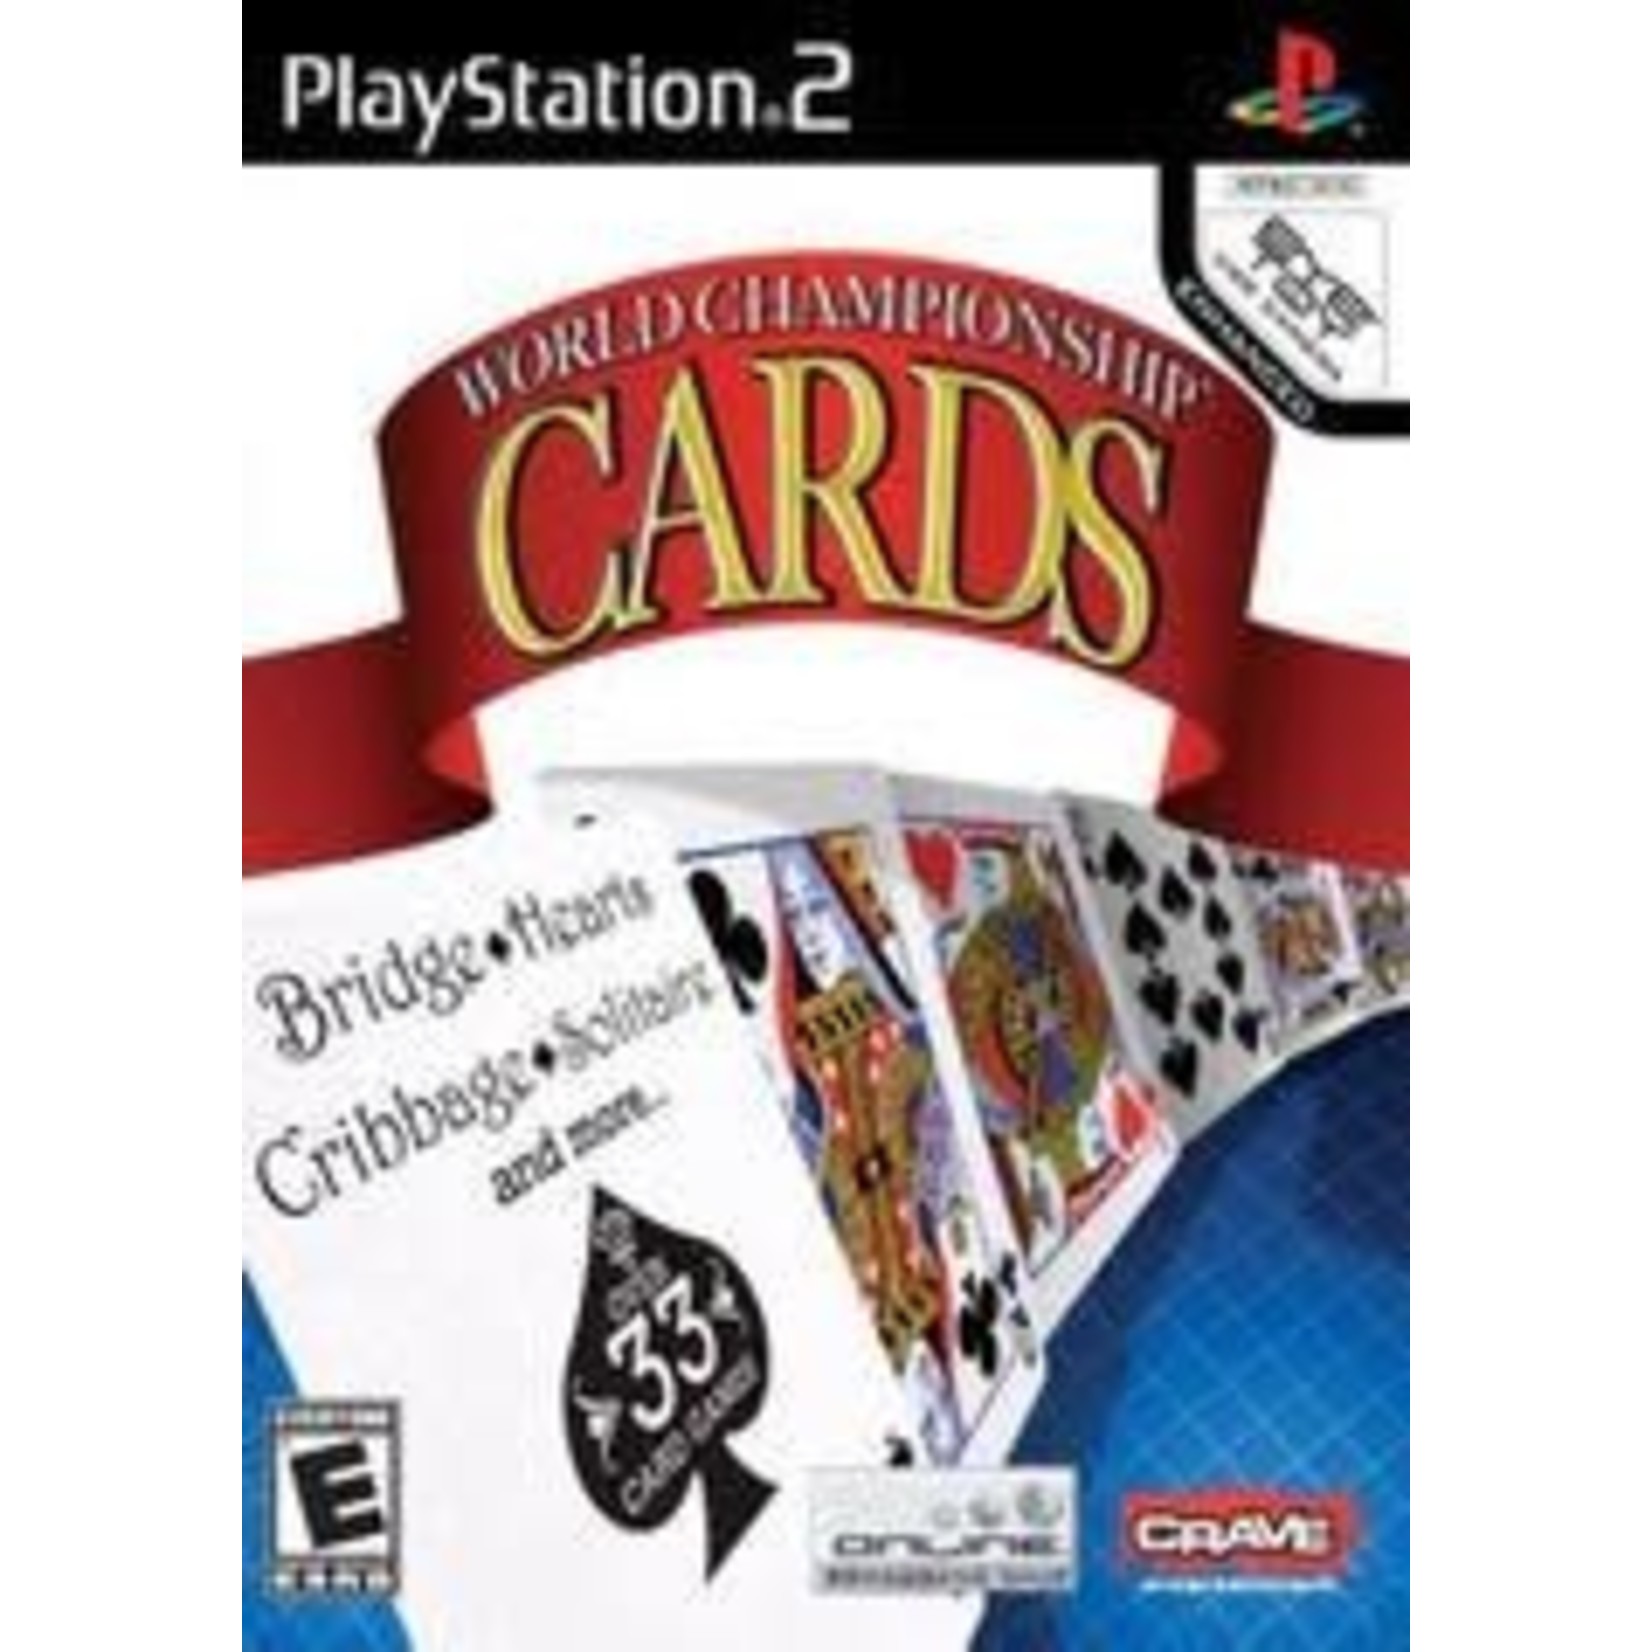 Playstation World Championship Cards [Playstation 2]